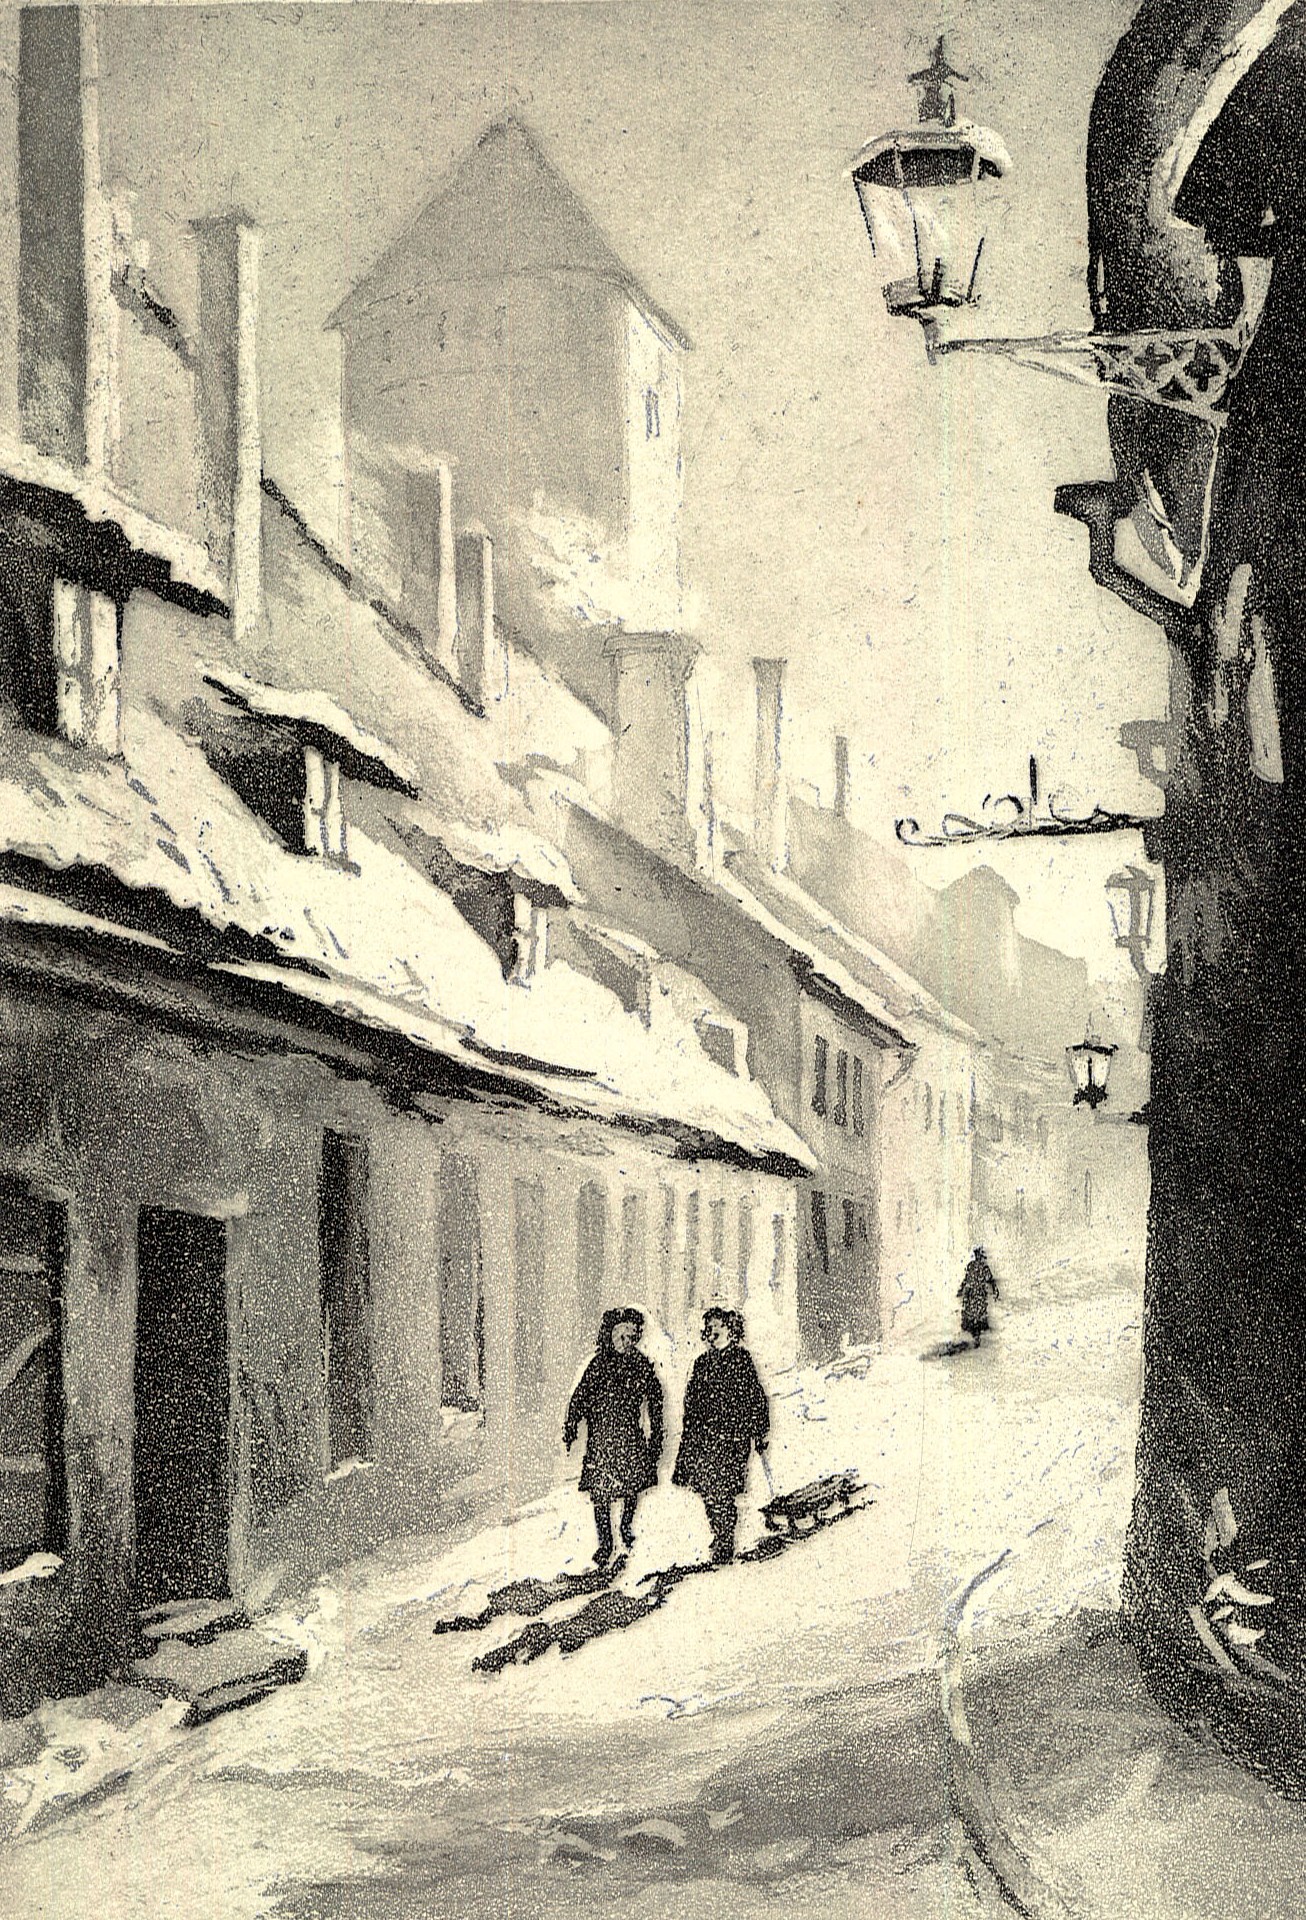 Müürivahe Street (page from map "Vana Tallinn")